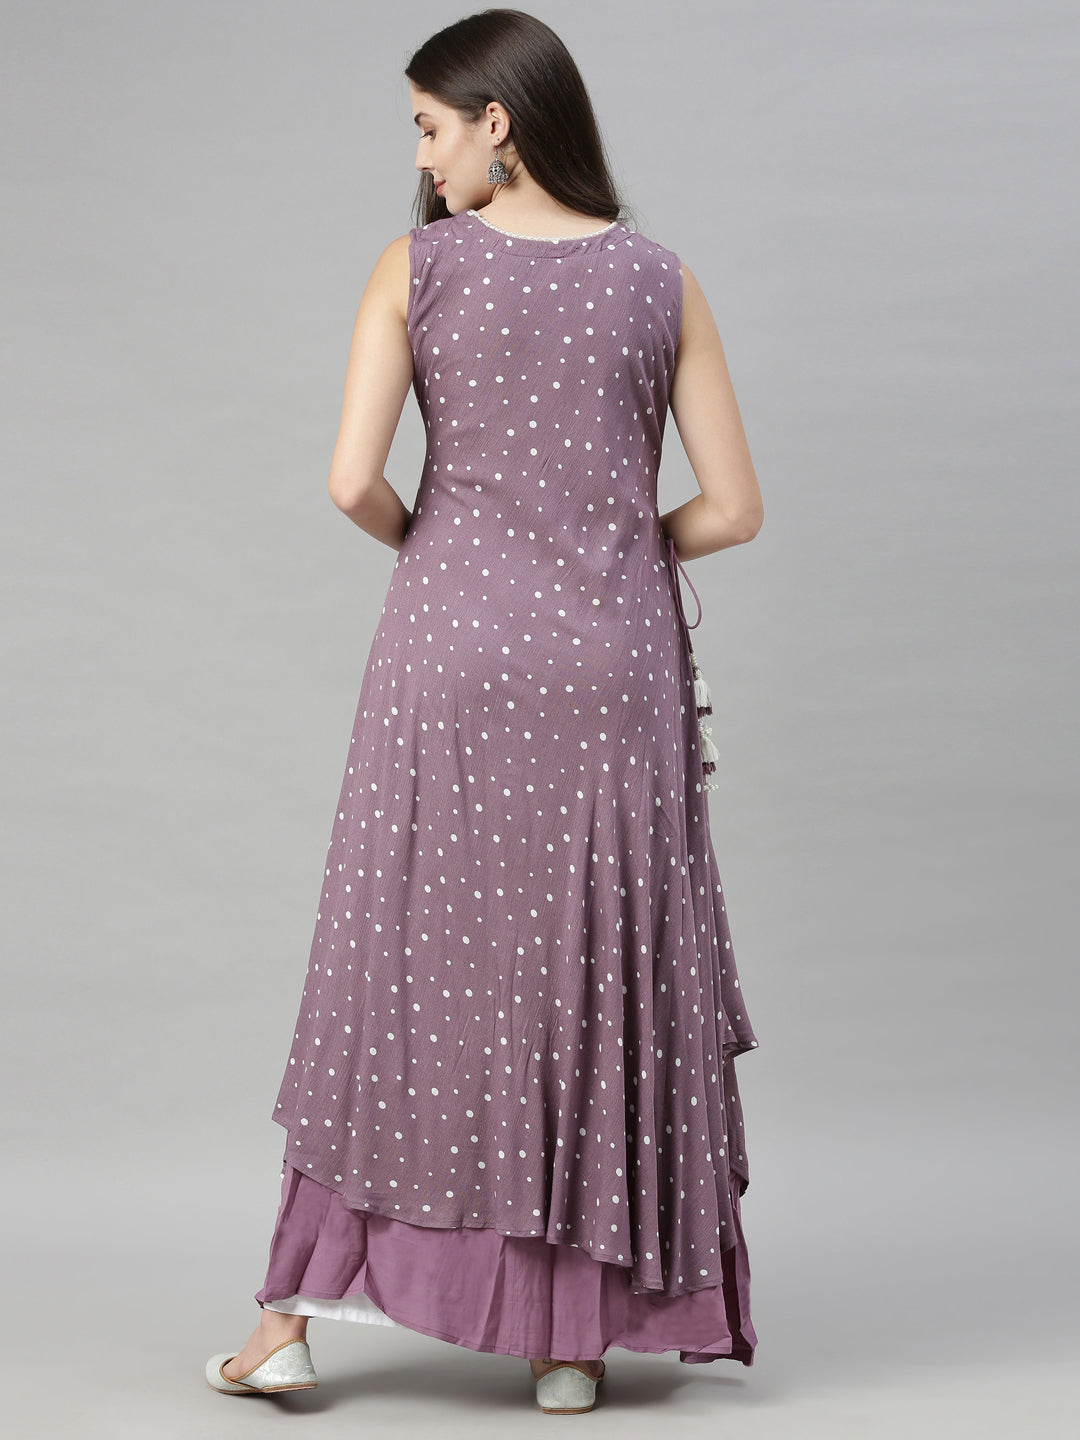 Neeru's Lavender Color Chiffon Fabric Tunic